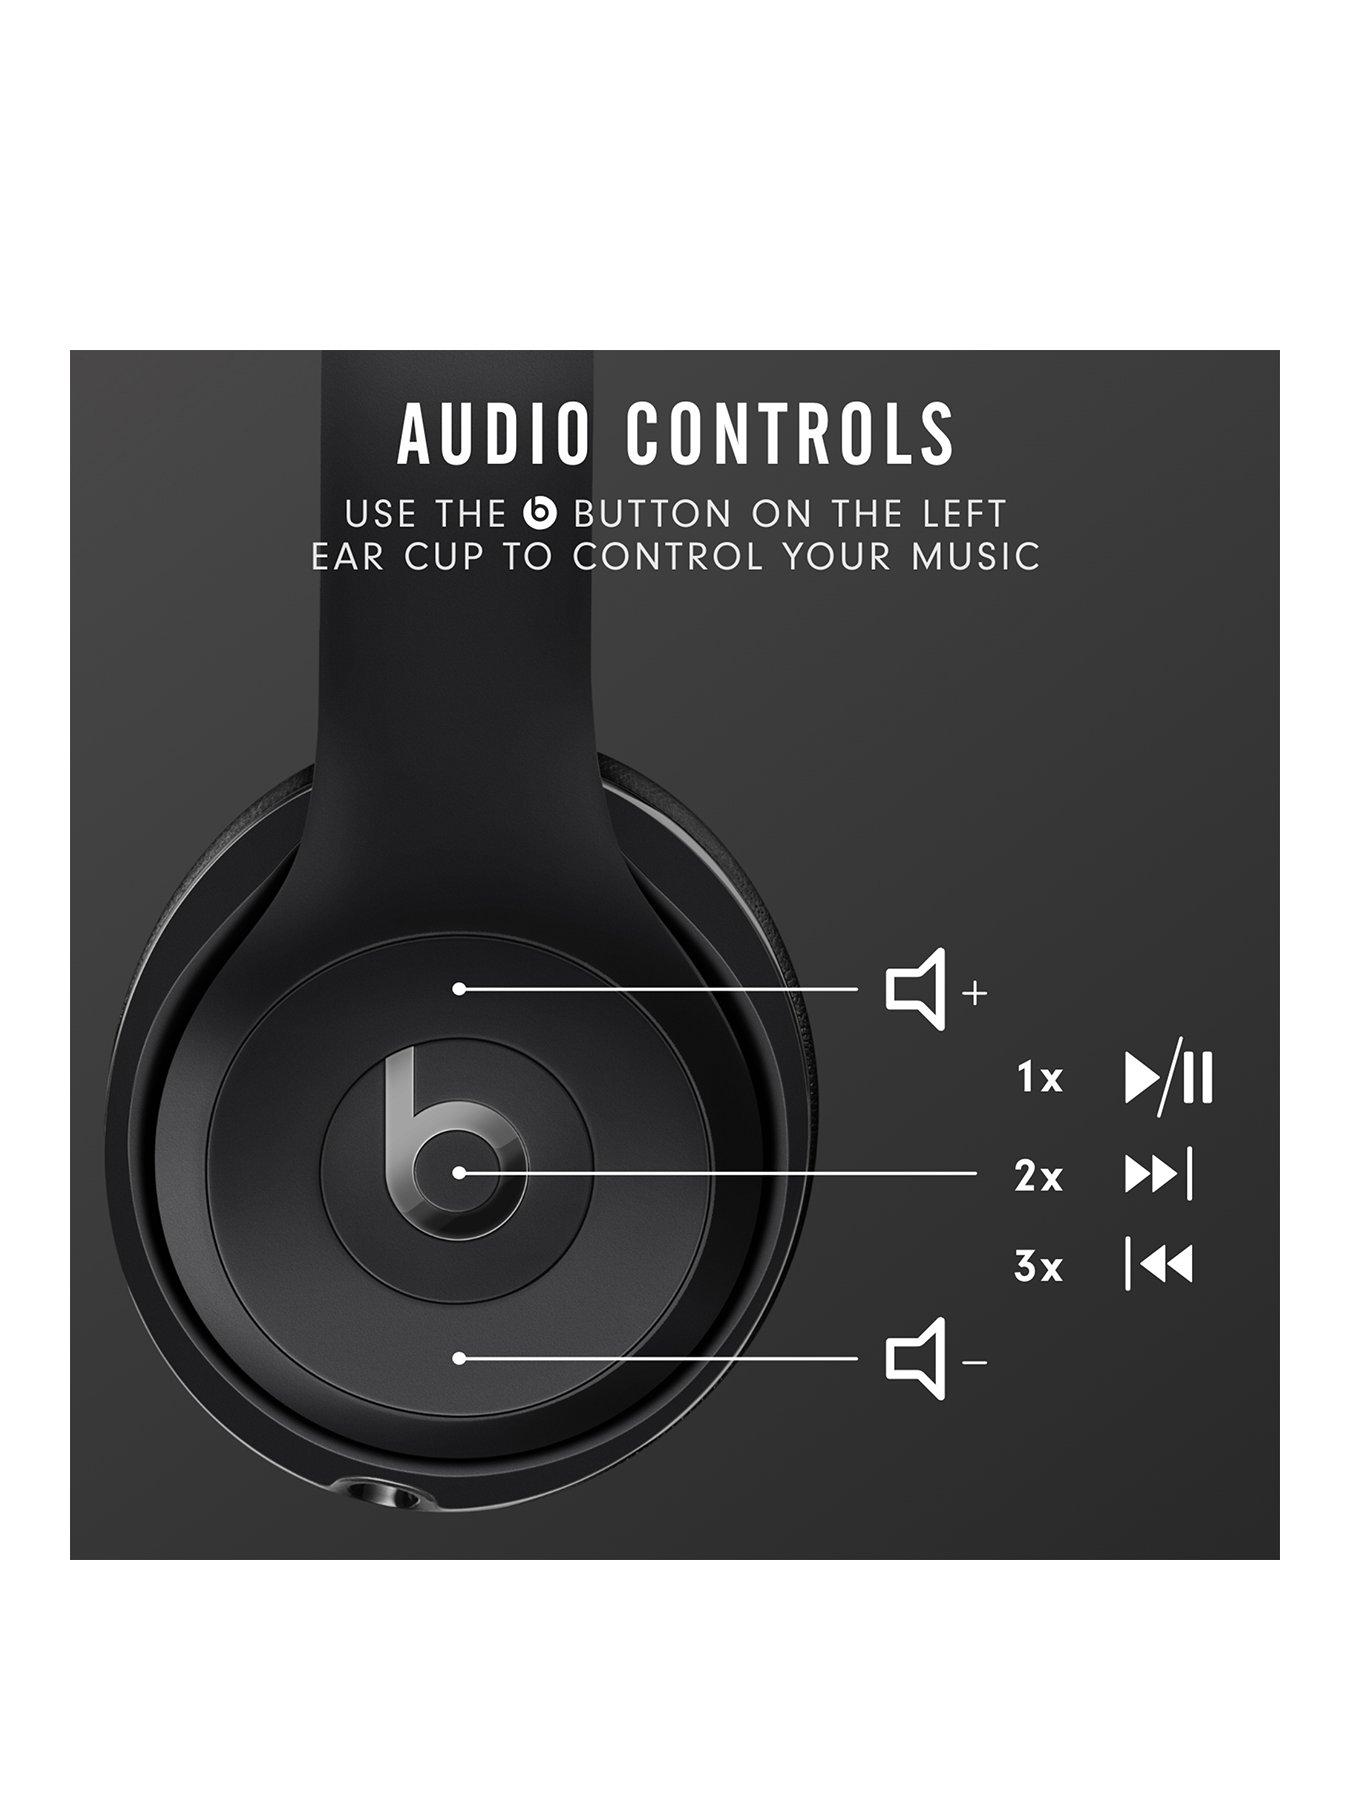 Beats Solo3 Wireless Headphones - Black 